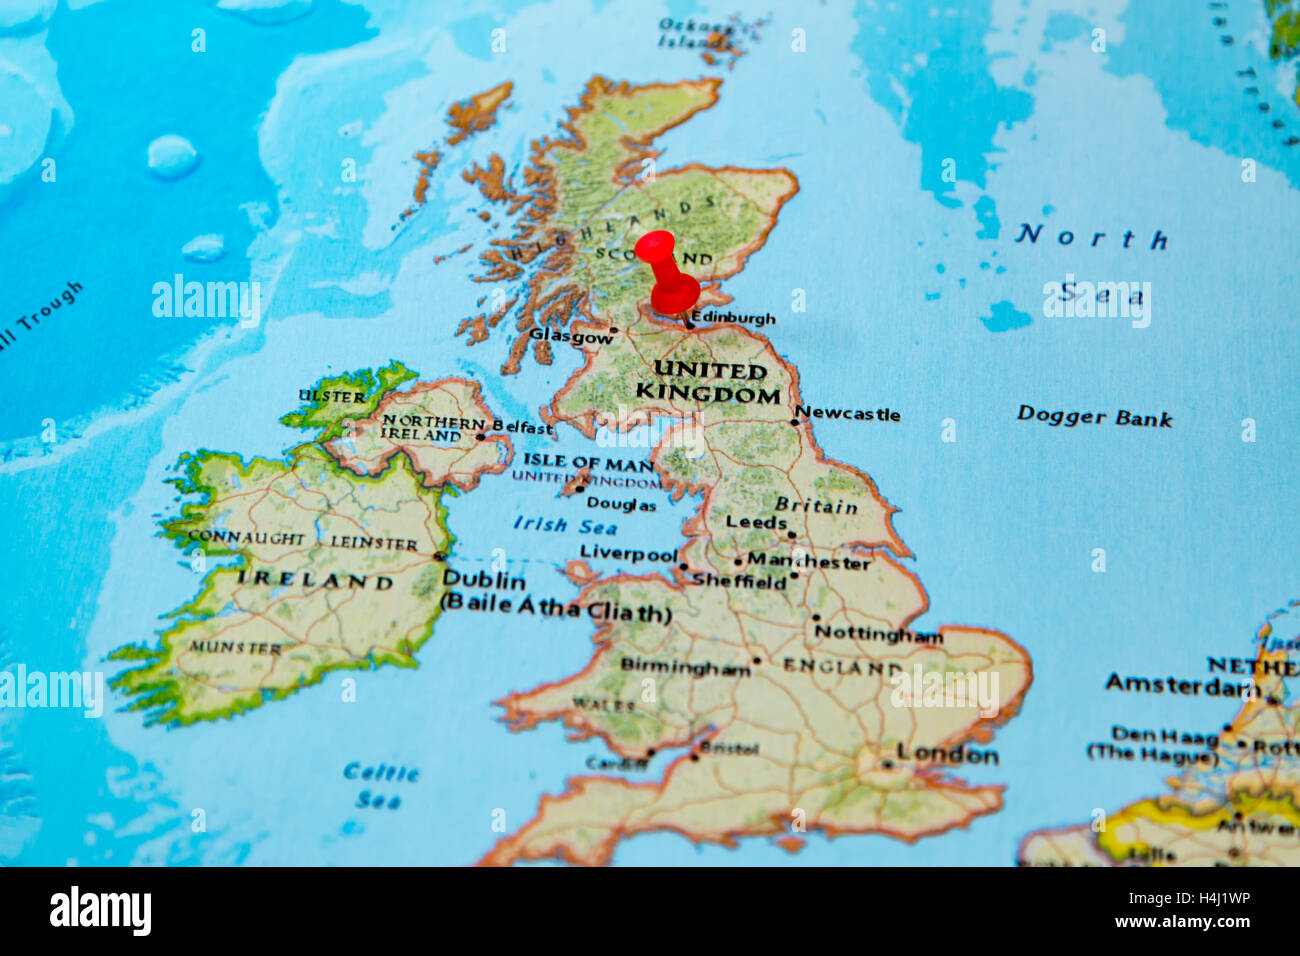 Edinburgh, Scotland pinned on a map of Europe. Stock Photo